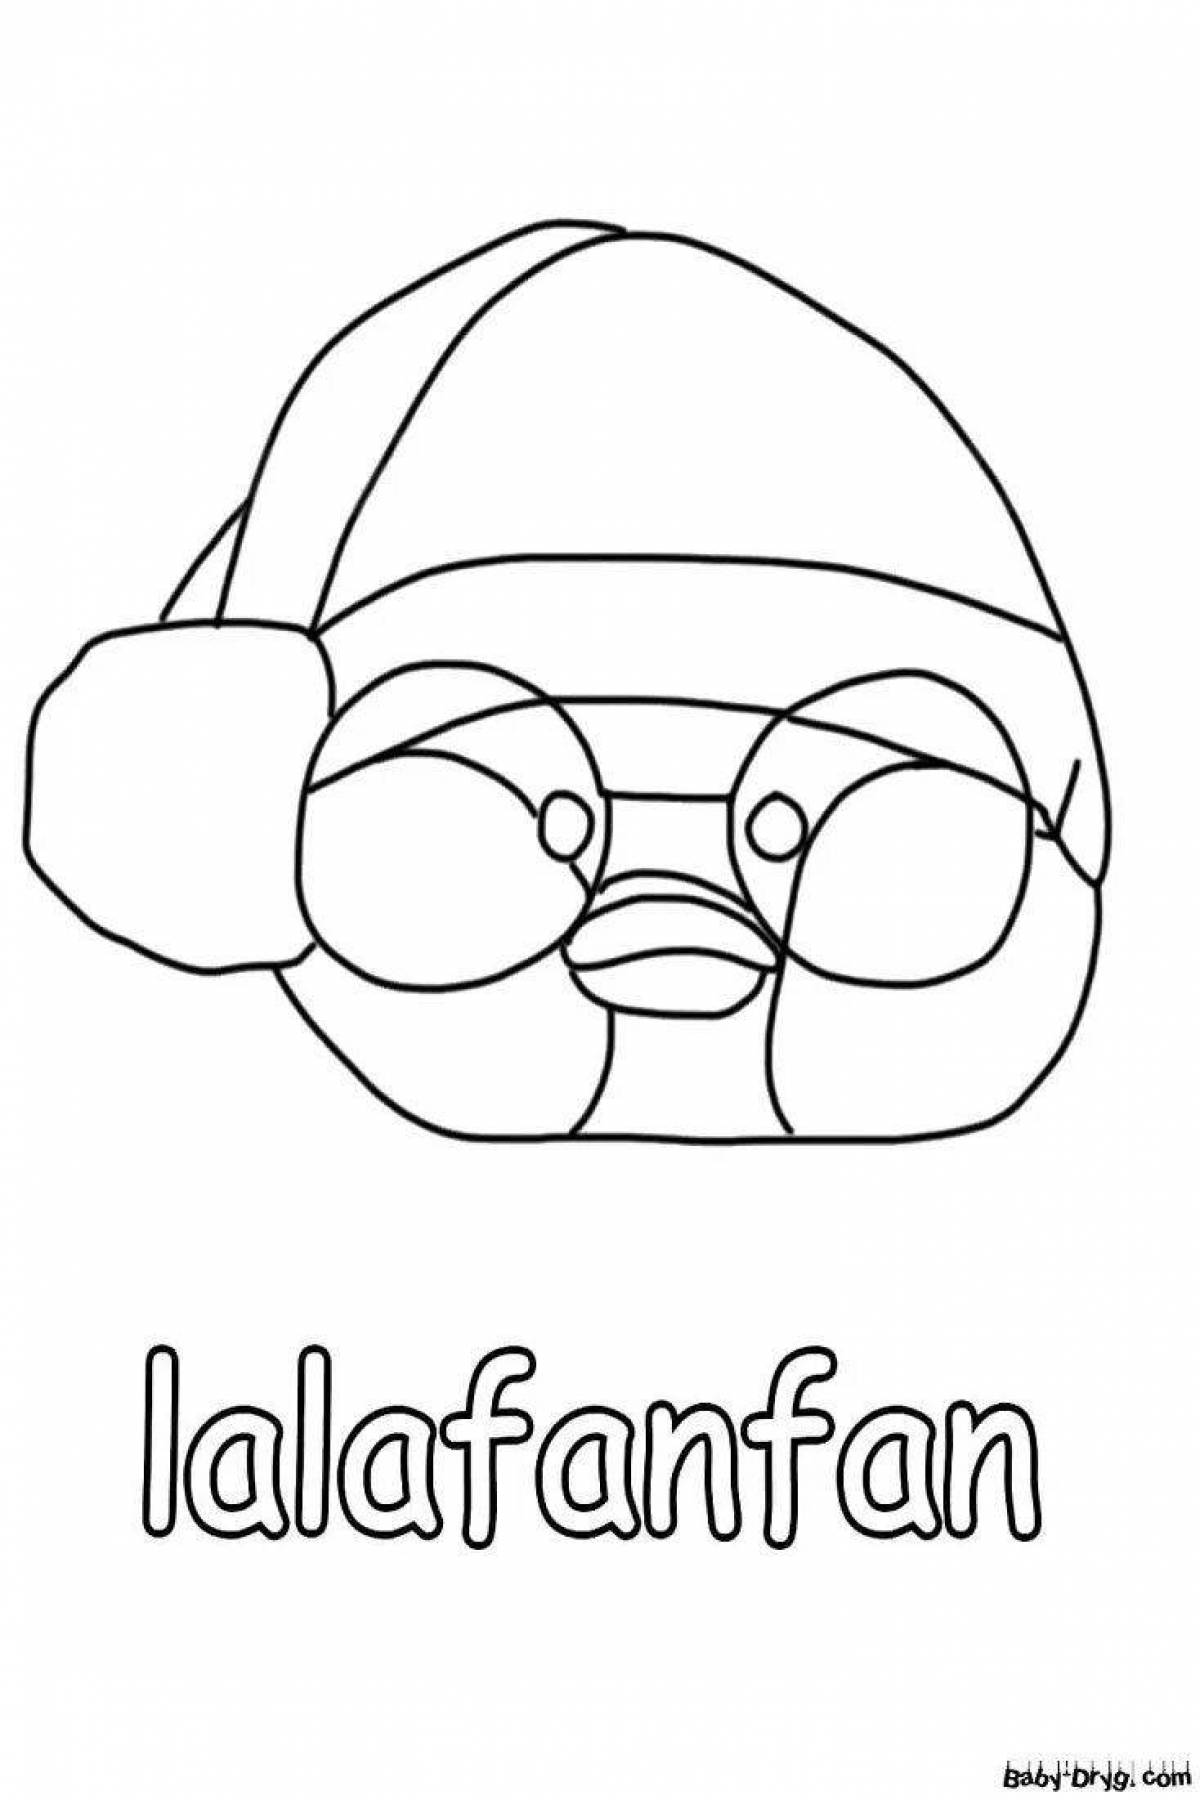 Lalafanfan bright mini duck coloring book